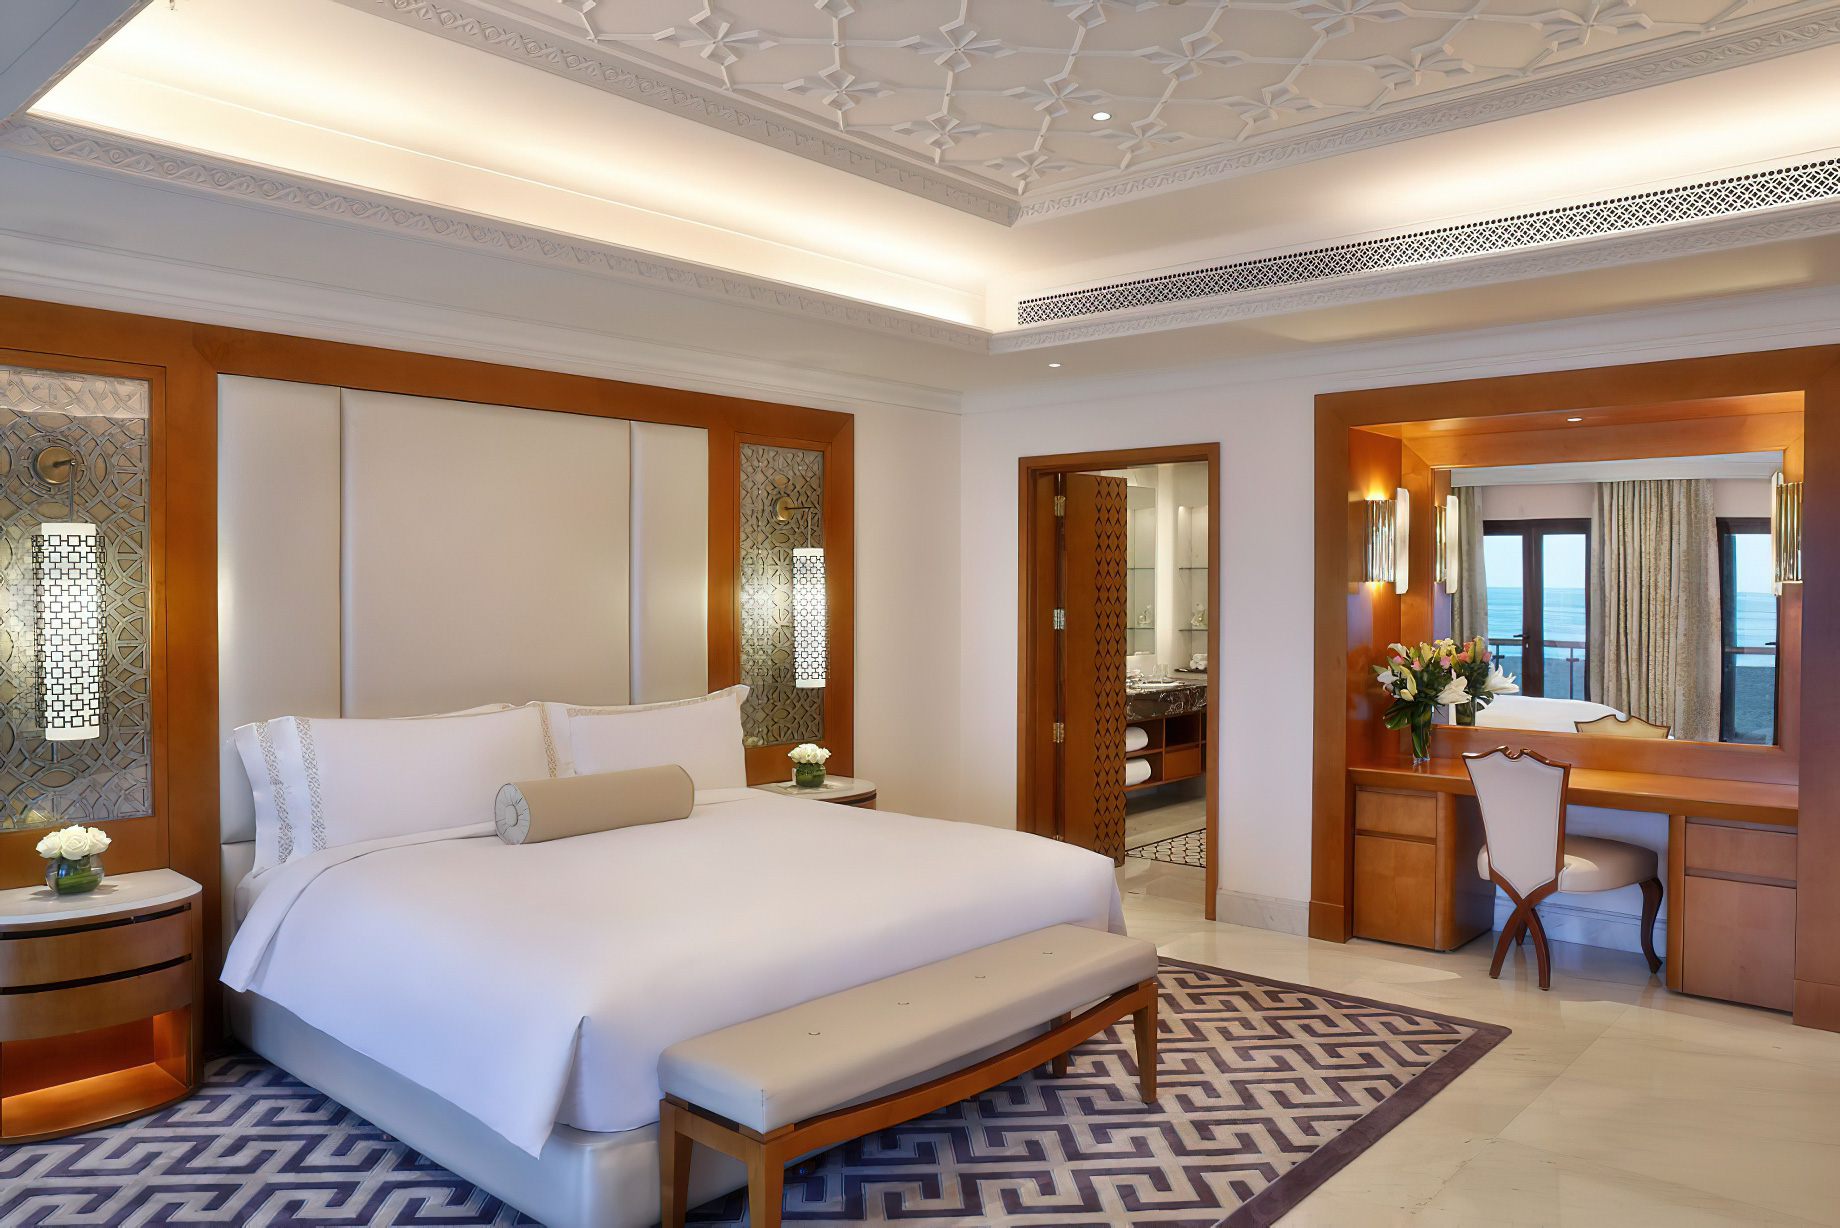 Al Bustan Palace, A Ritz-Carlton Hotel – Muscat, Oman – Presidential Sea View Suite Bedroom